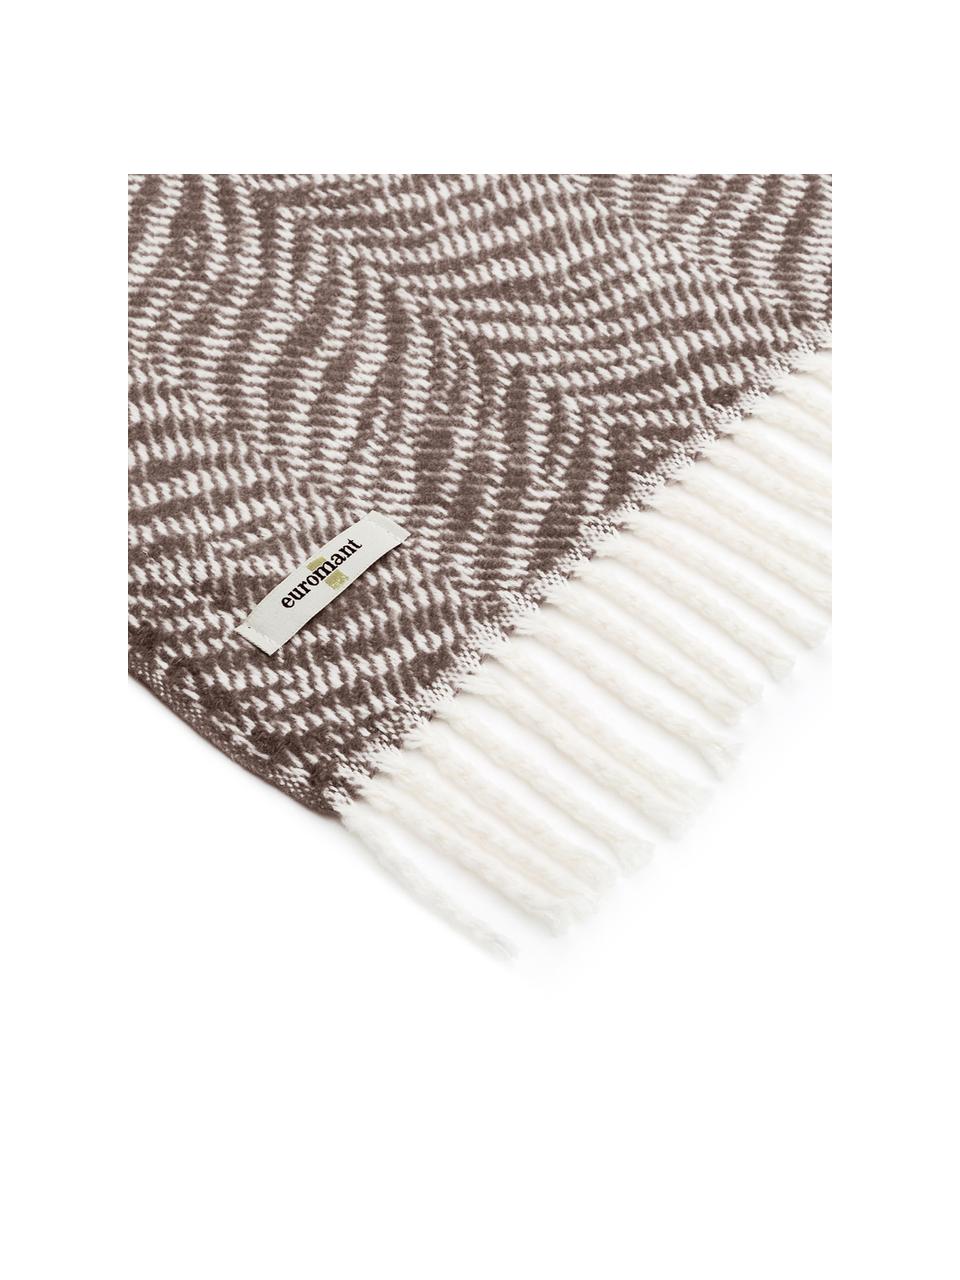 Plaid Greta mit Tiger-Muster, 50% Baumwolle, 50% Acryl, Taupe, Gebrochenes Weiß, 140 x 180 cm